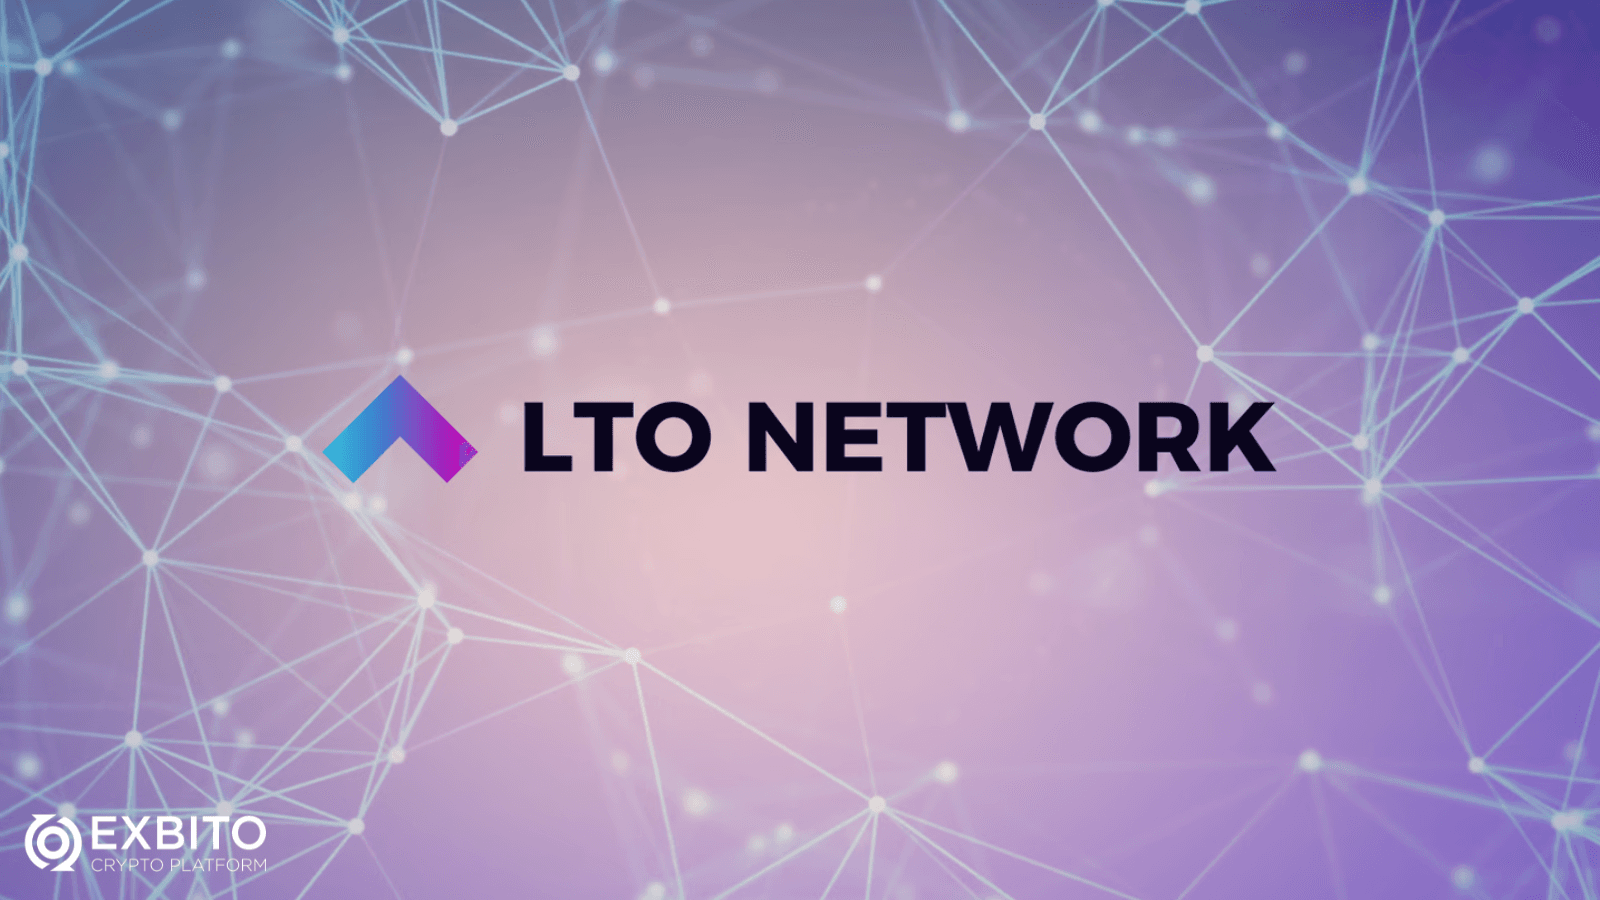  ال تی او نتورک (LTO Network) چیست؟